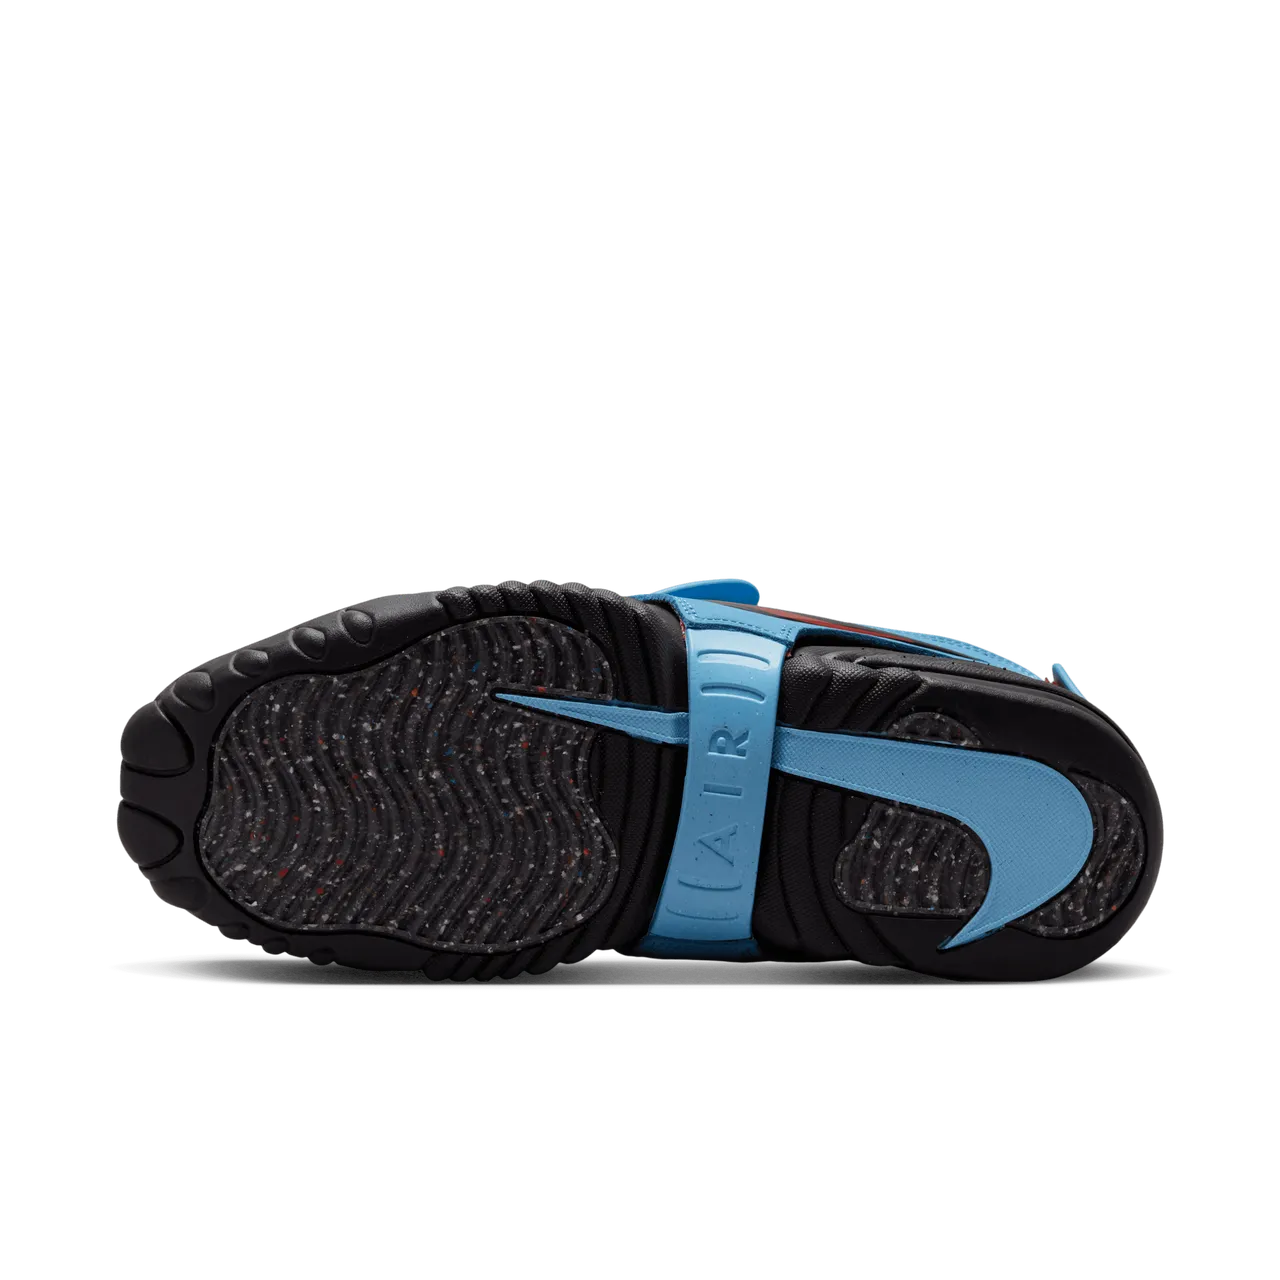 Nike x Ambush Air Adjust Force Men's Shoes - Blue - Leather